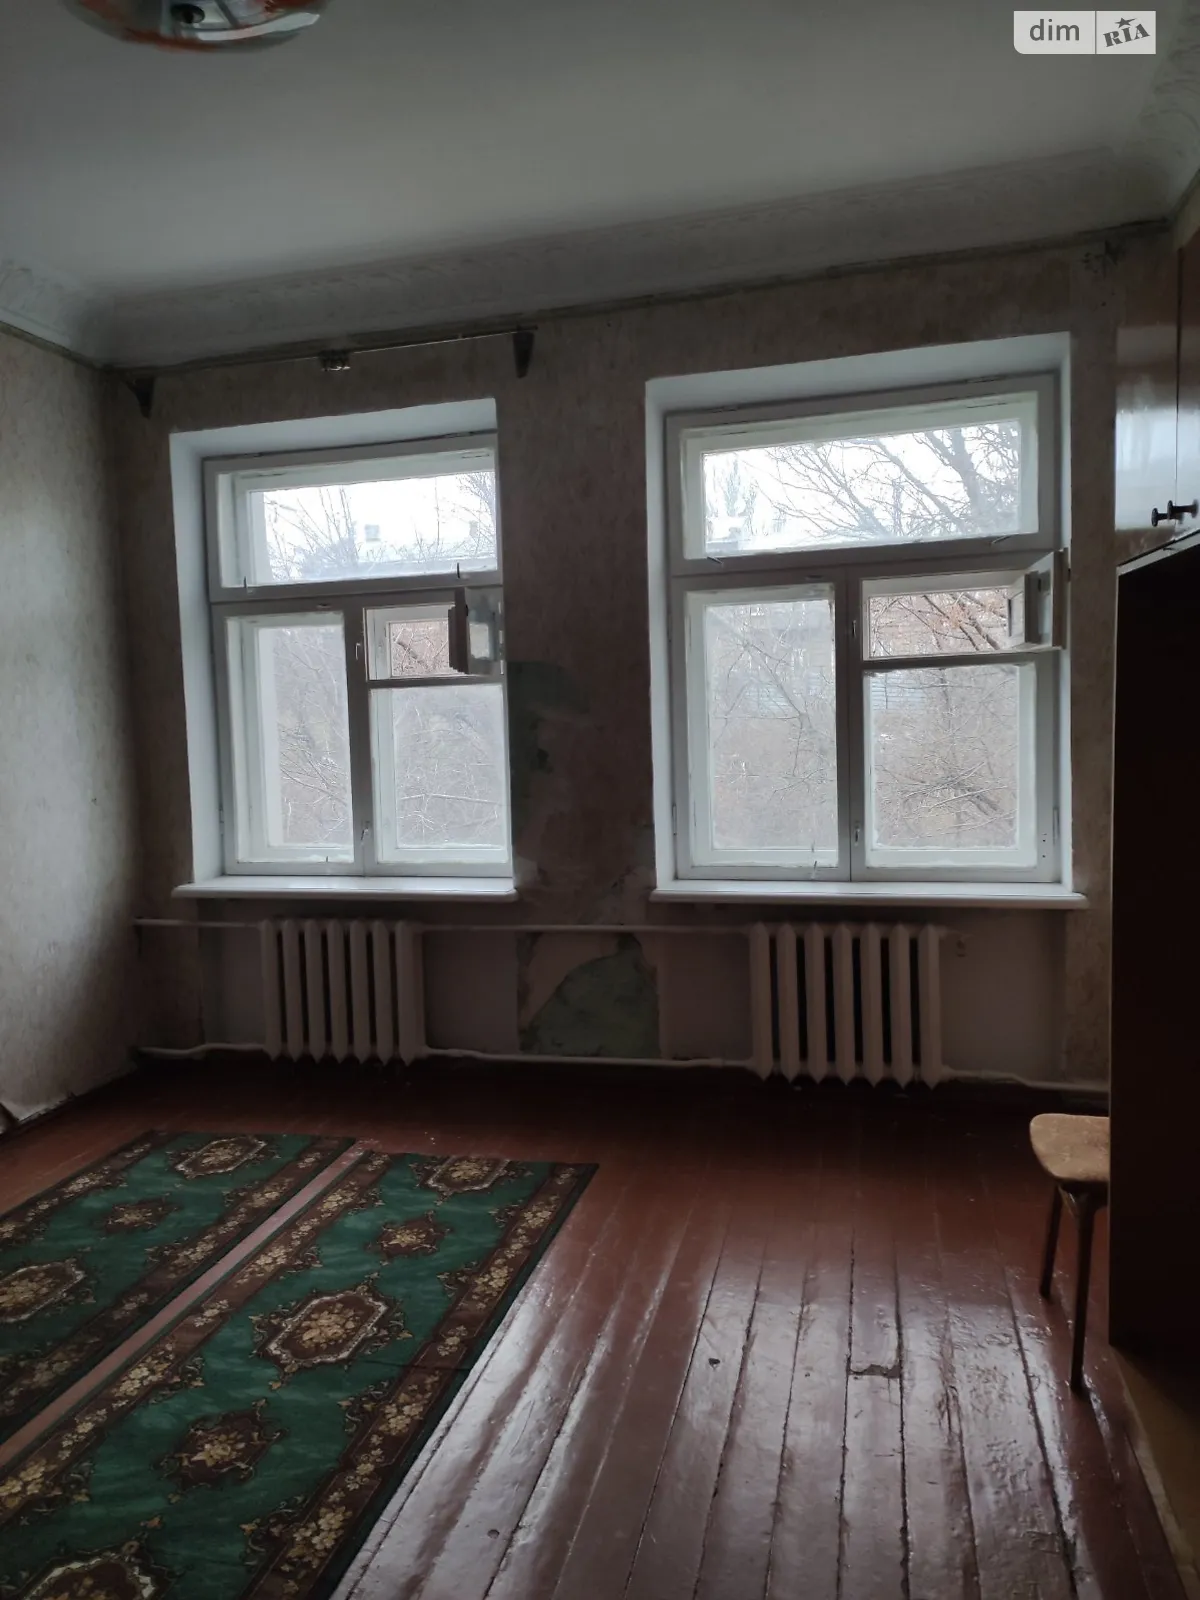 Продается комната 52 кв. м в Одессе, цена: 16000 $ - фото 1